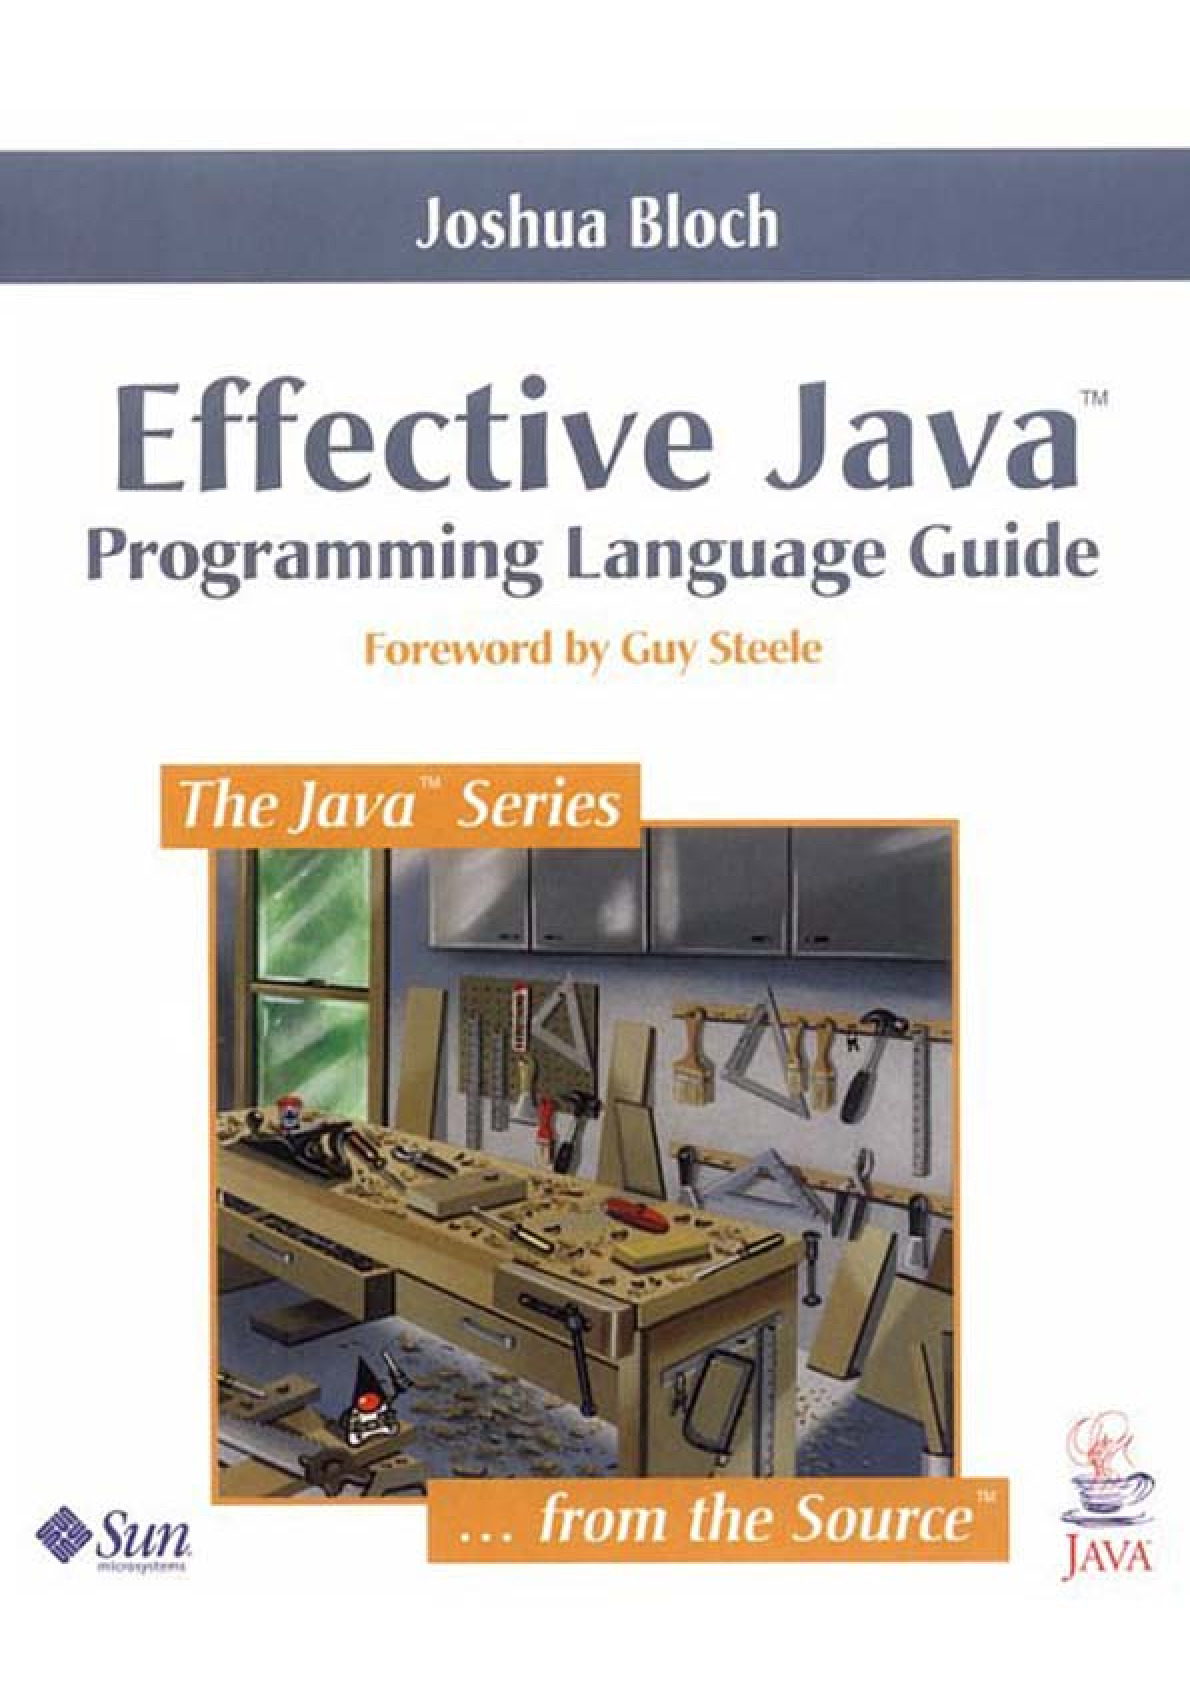 [JAVA][Effective Java Programming Language Guide]